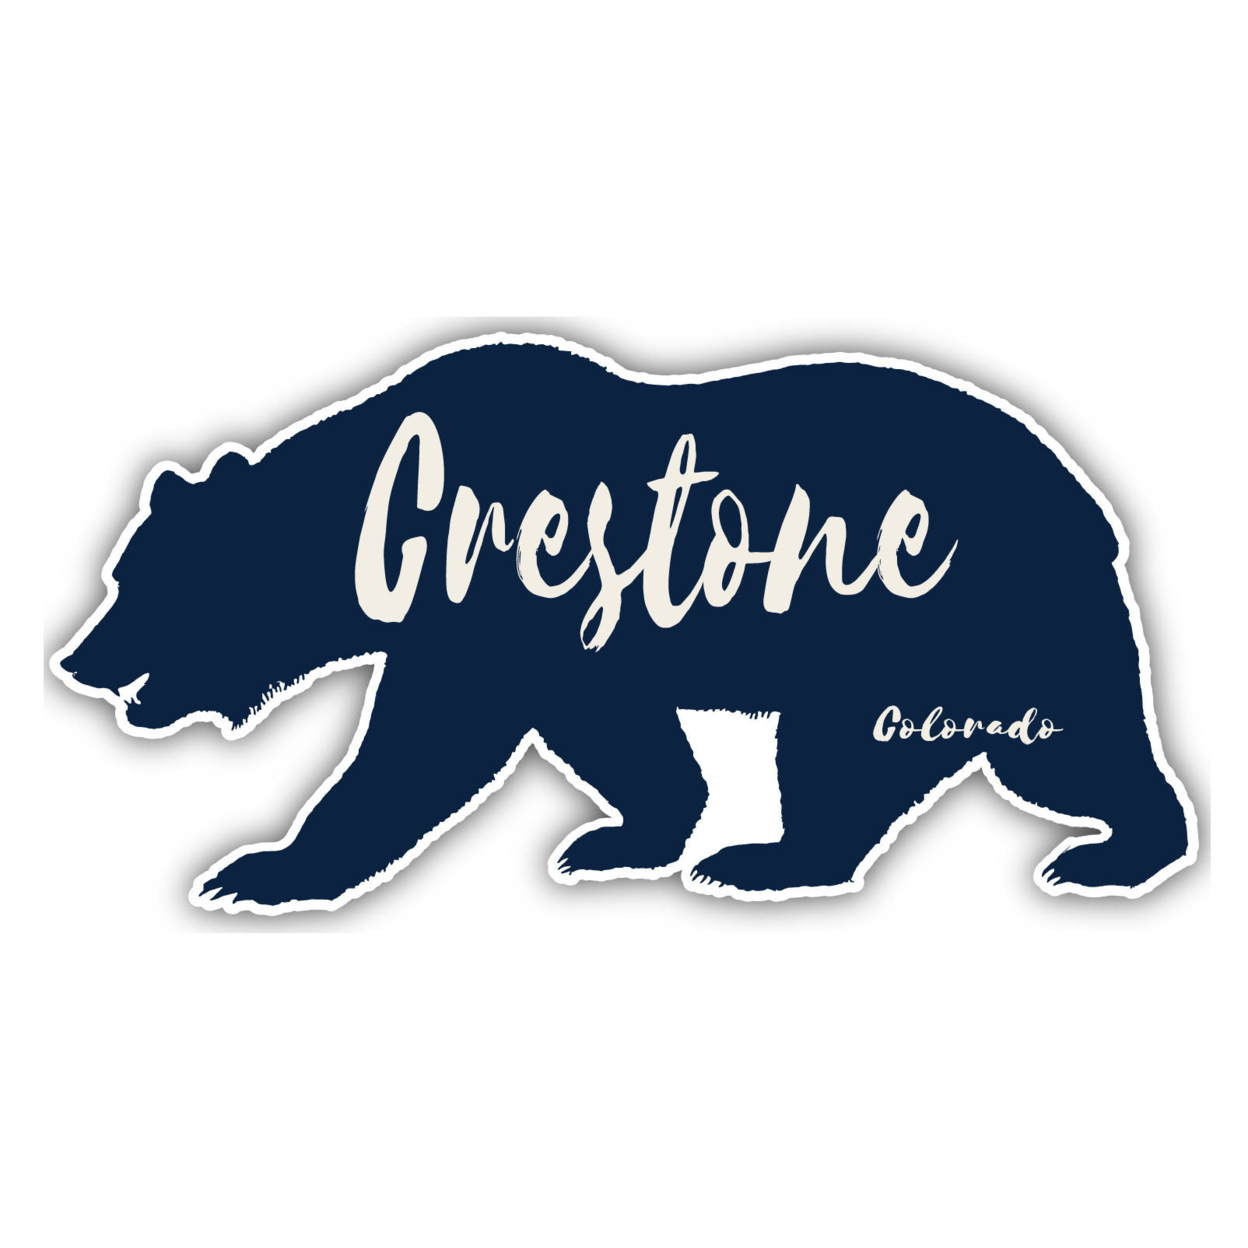 Crestone Colorado Souvenir Decorative Stickers (Choose Theme And Size) - Single Unit, 4-Inch, Tent